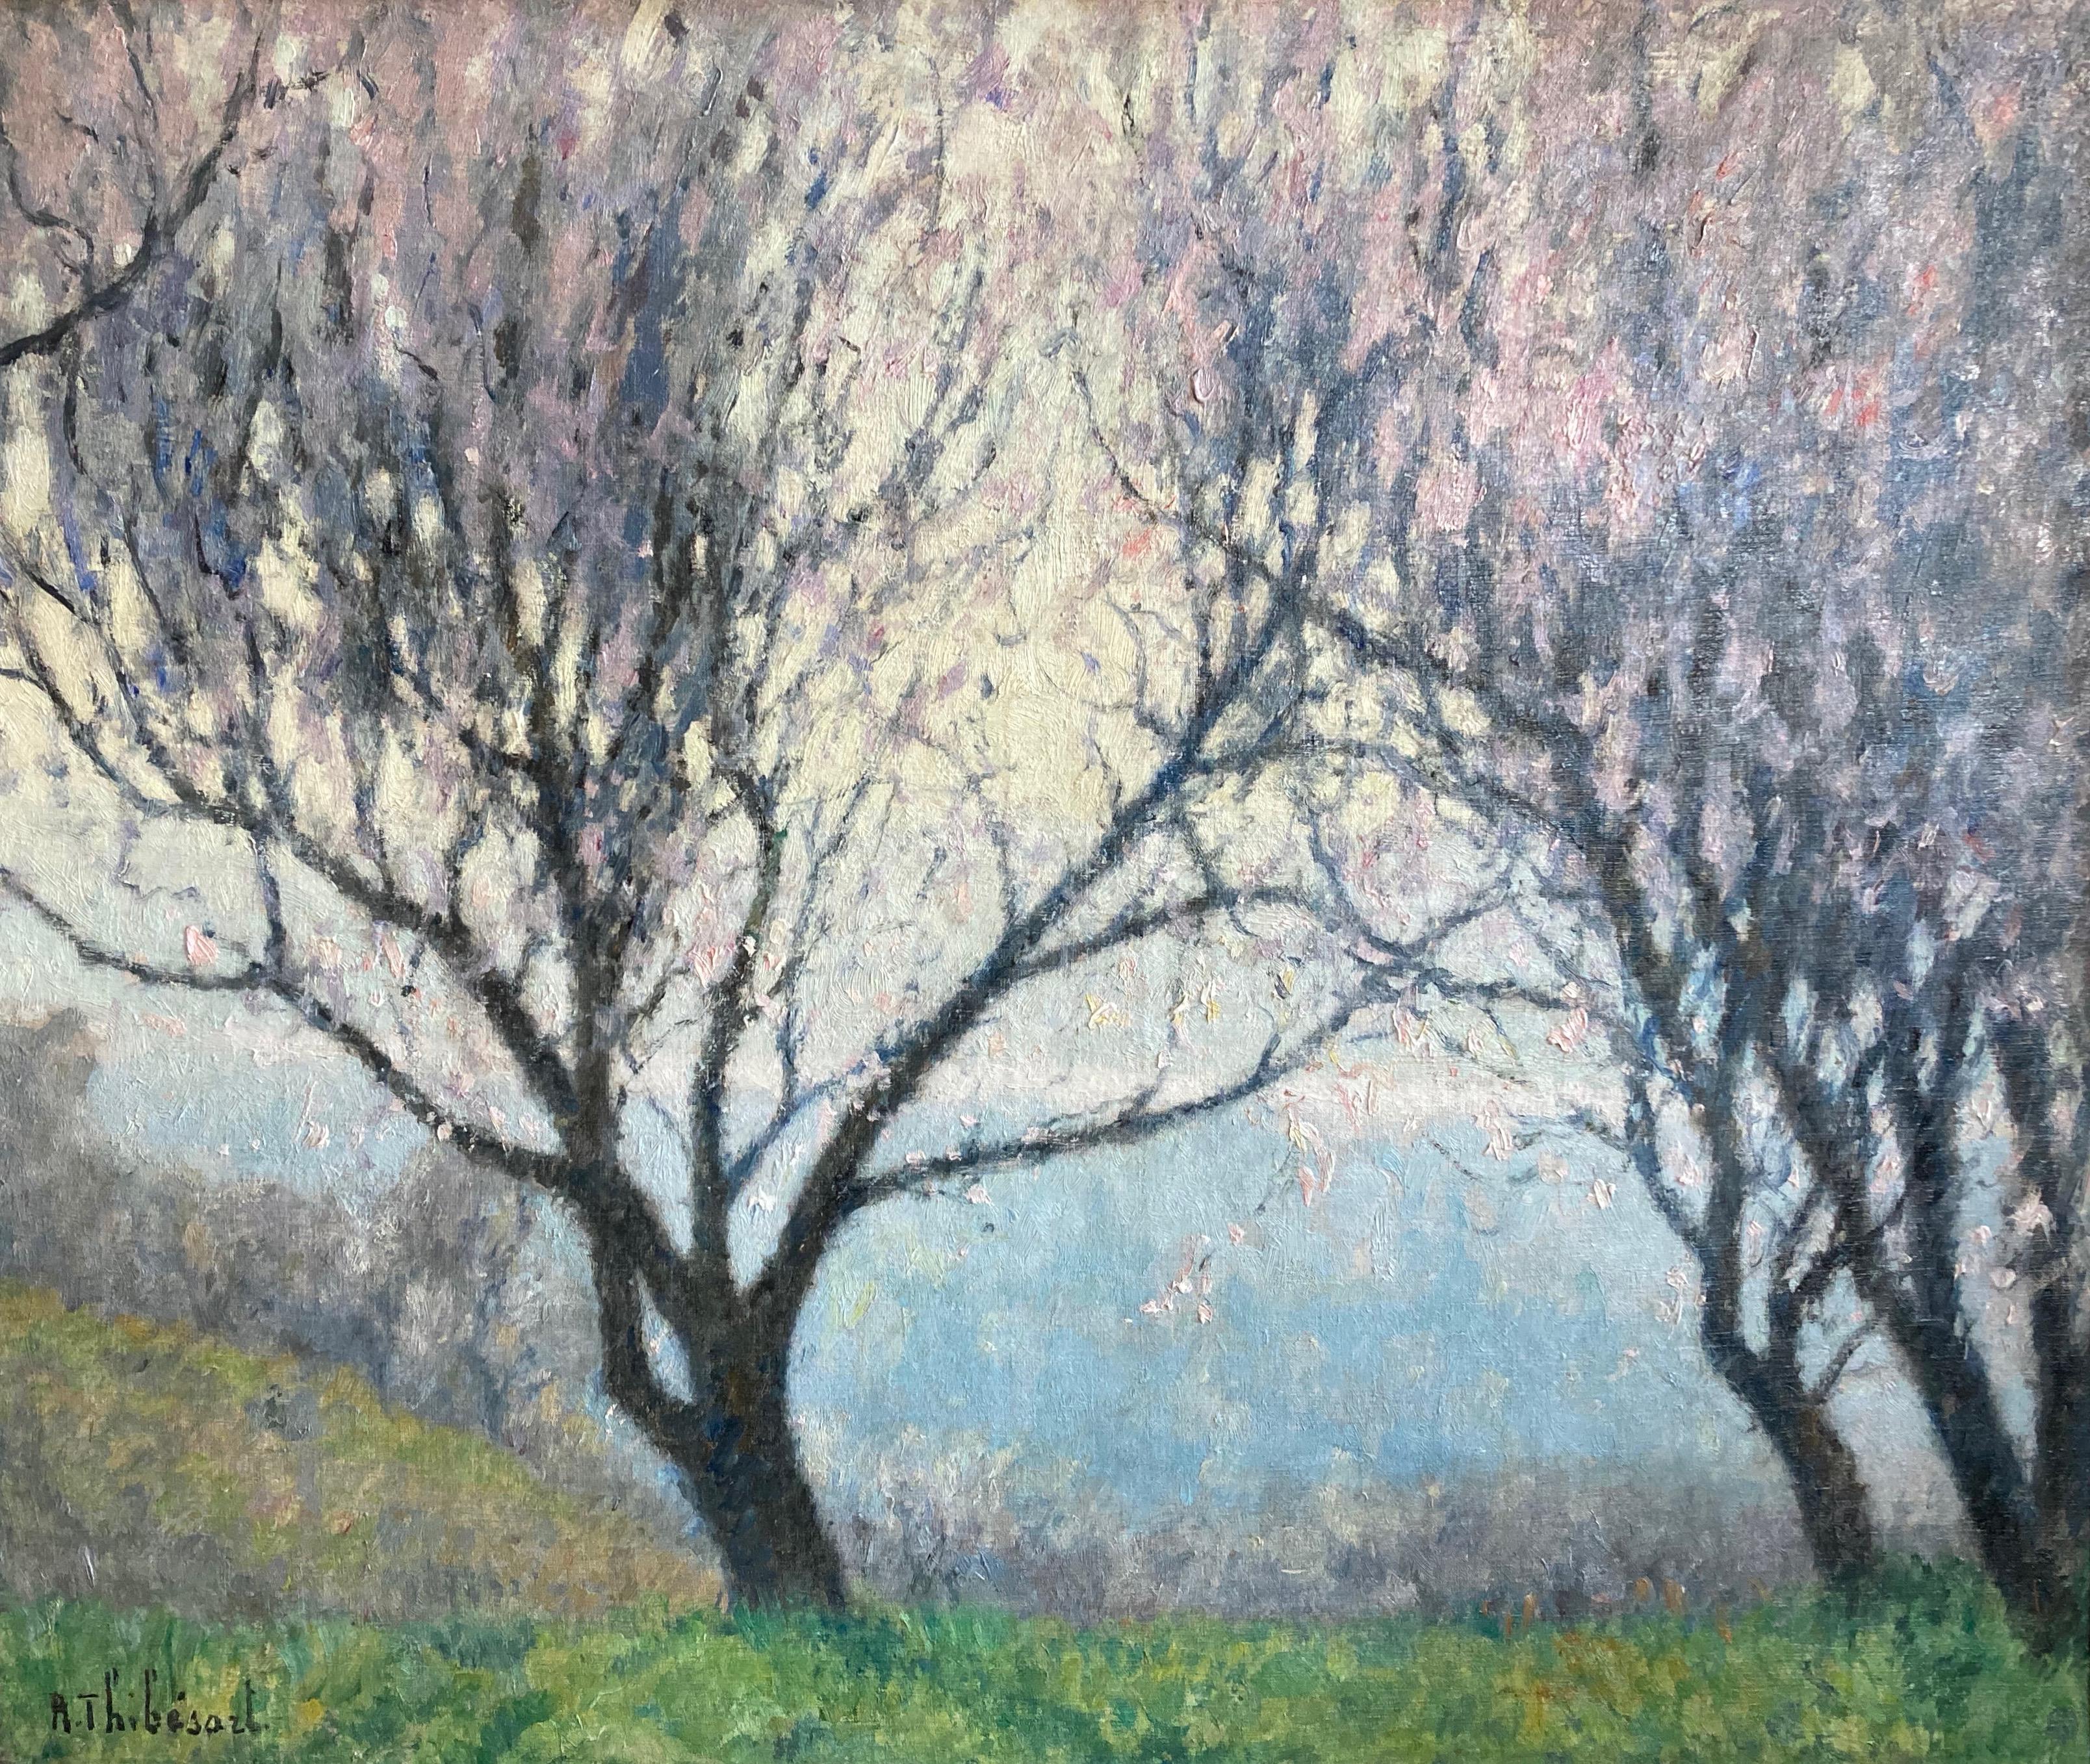  Raymond Thibésart, French Impressionist, Springtime on the banks of the Seine - Painting by Raymond Thibesart